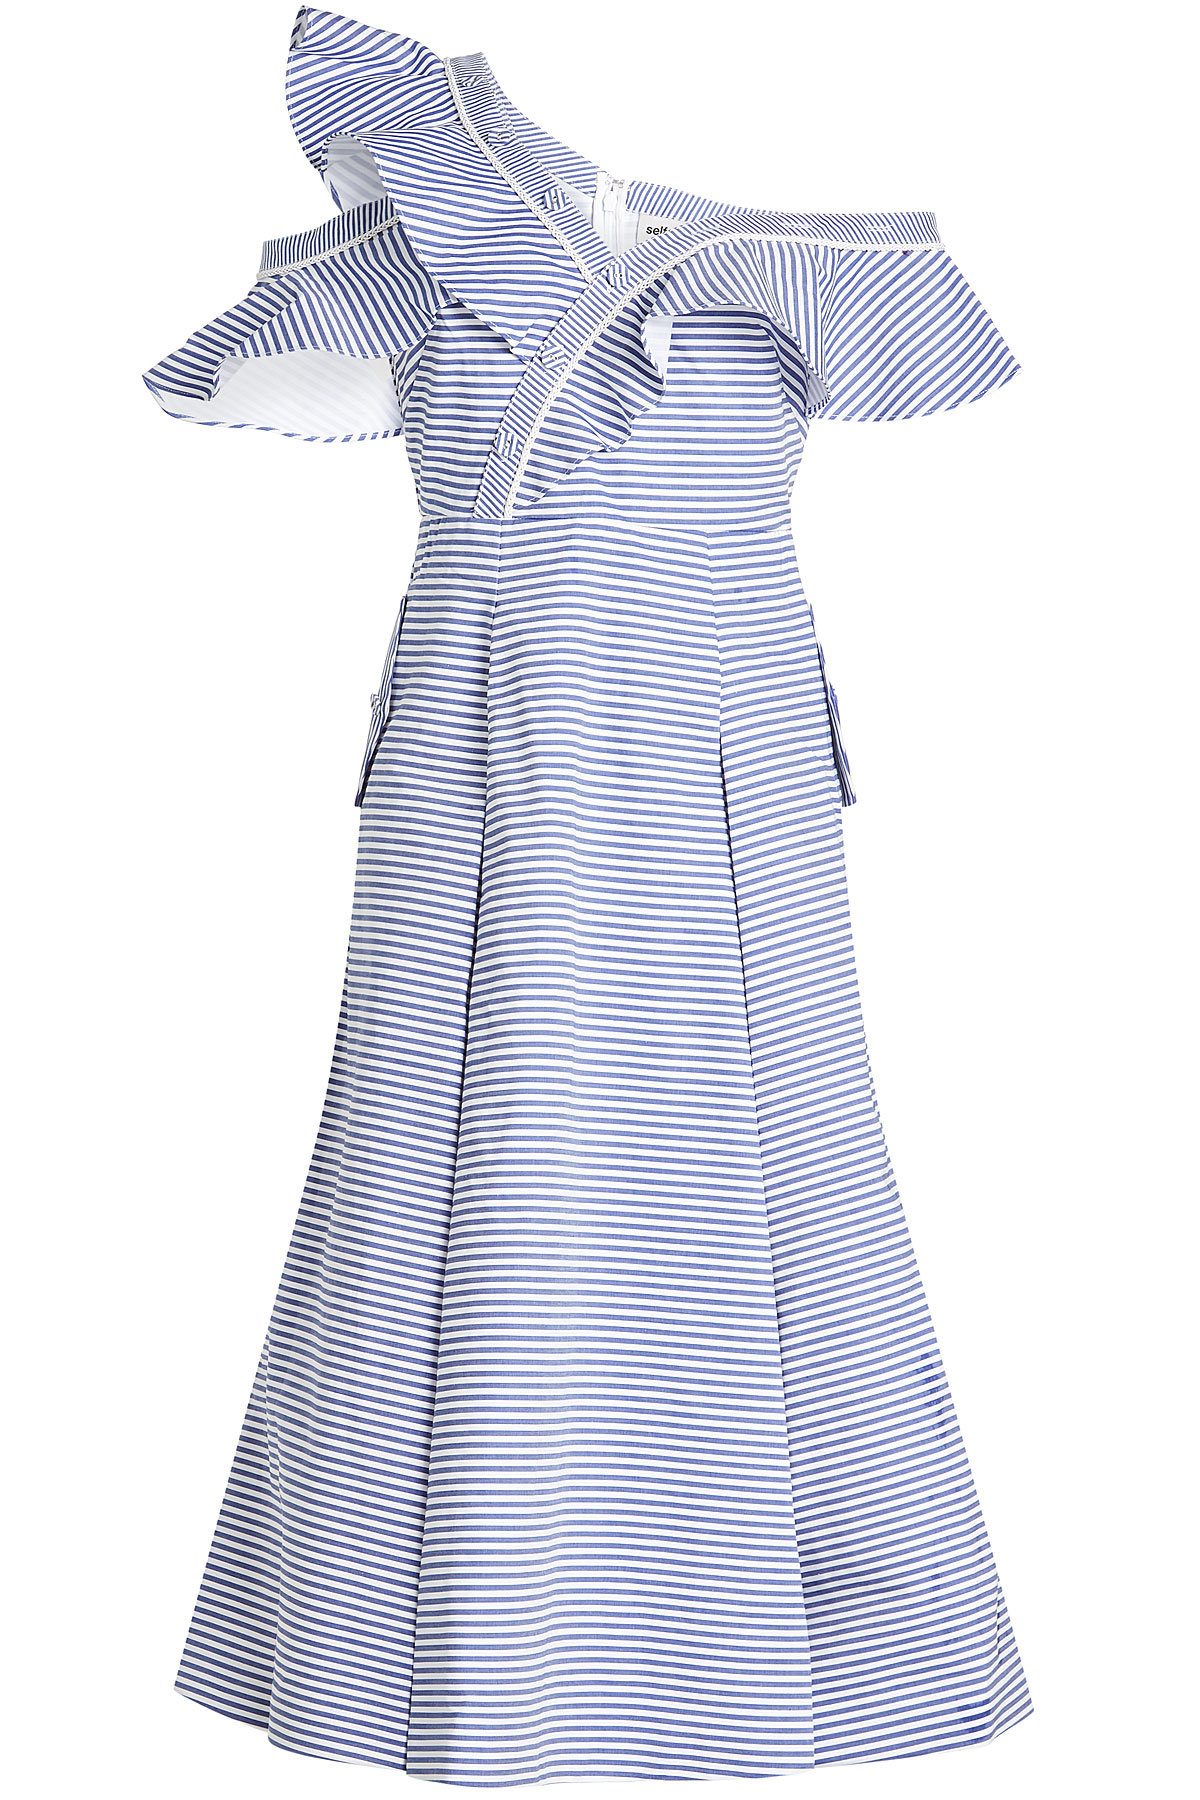 Self-Portrait - Striped Off-Shoulder Dress in Cotton